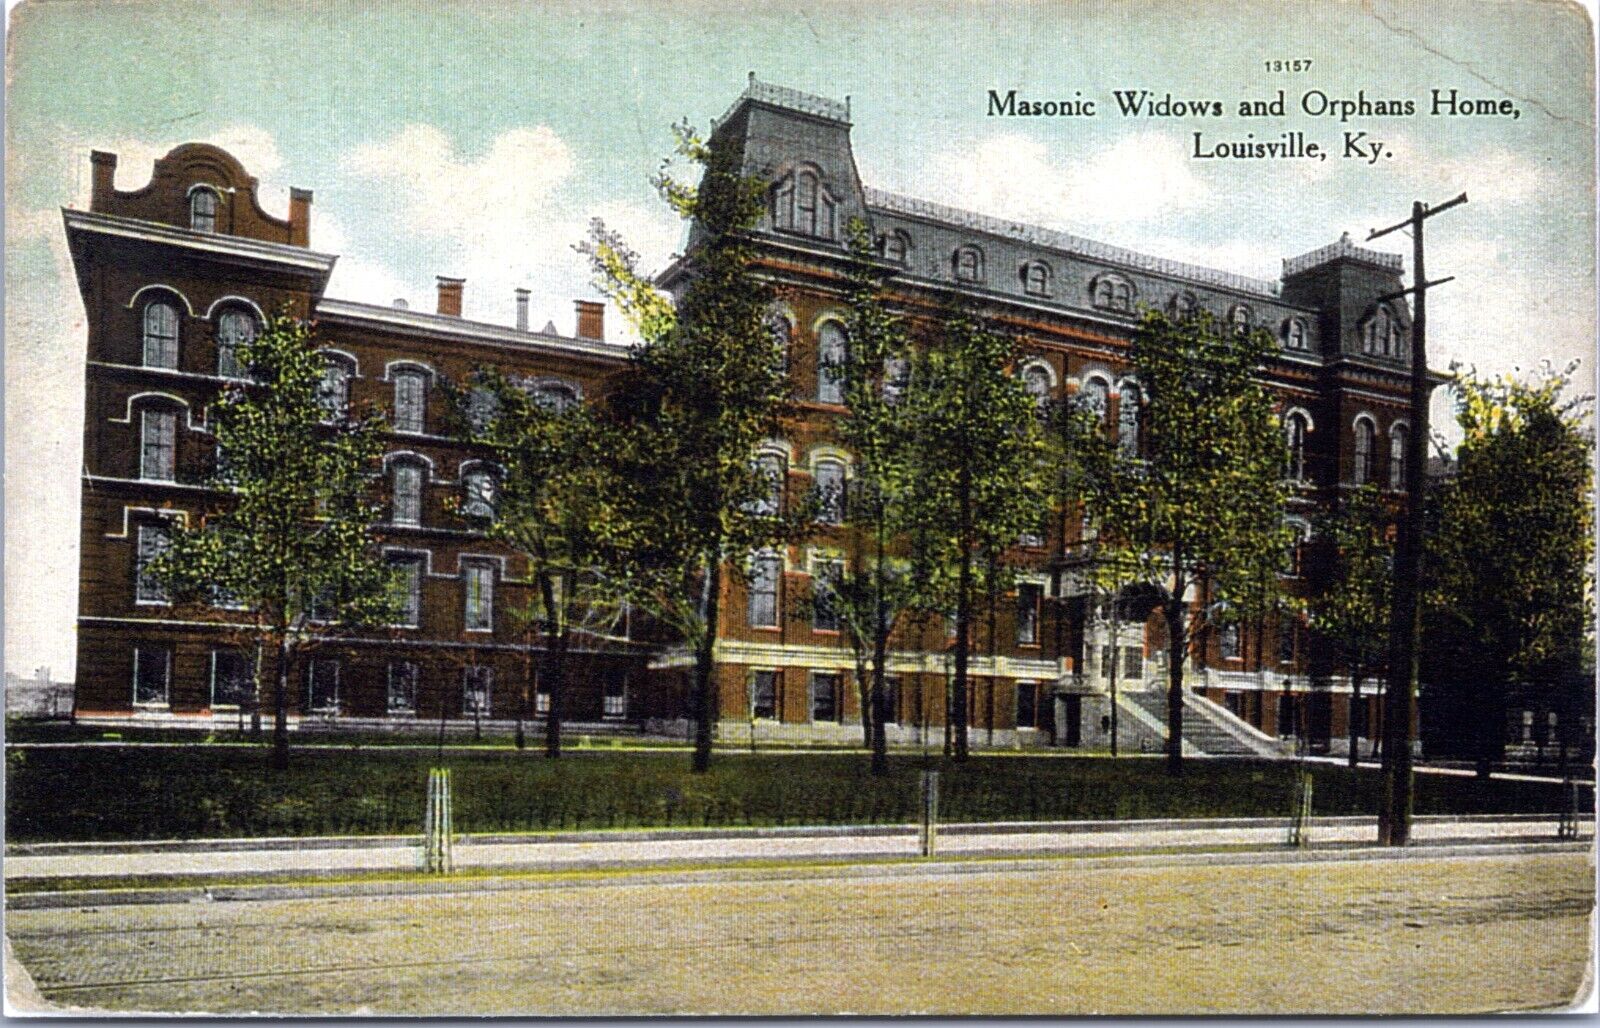 Masonic Widows and Orphans Home, Louisville Kentucky- Blank Back Postcard c1910s